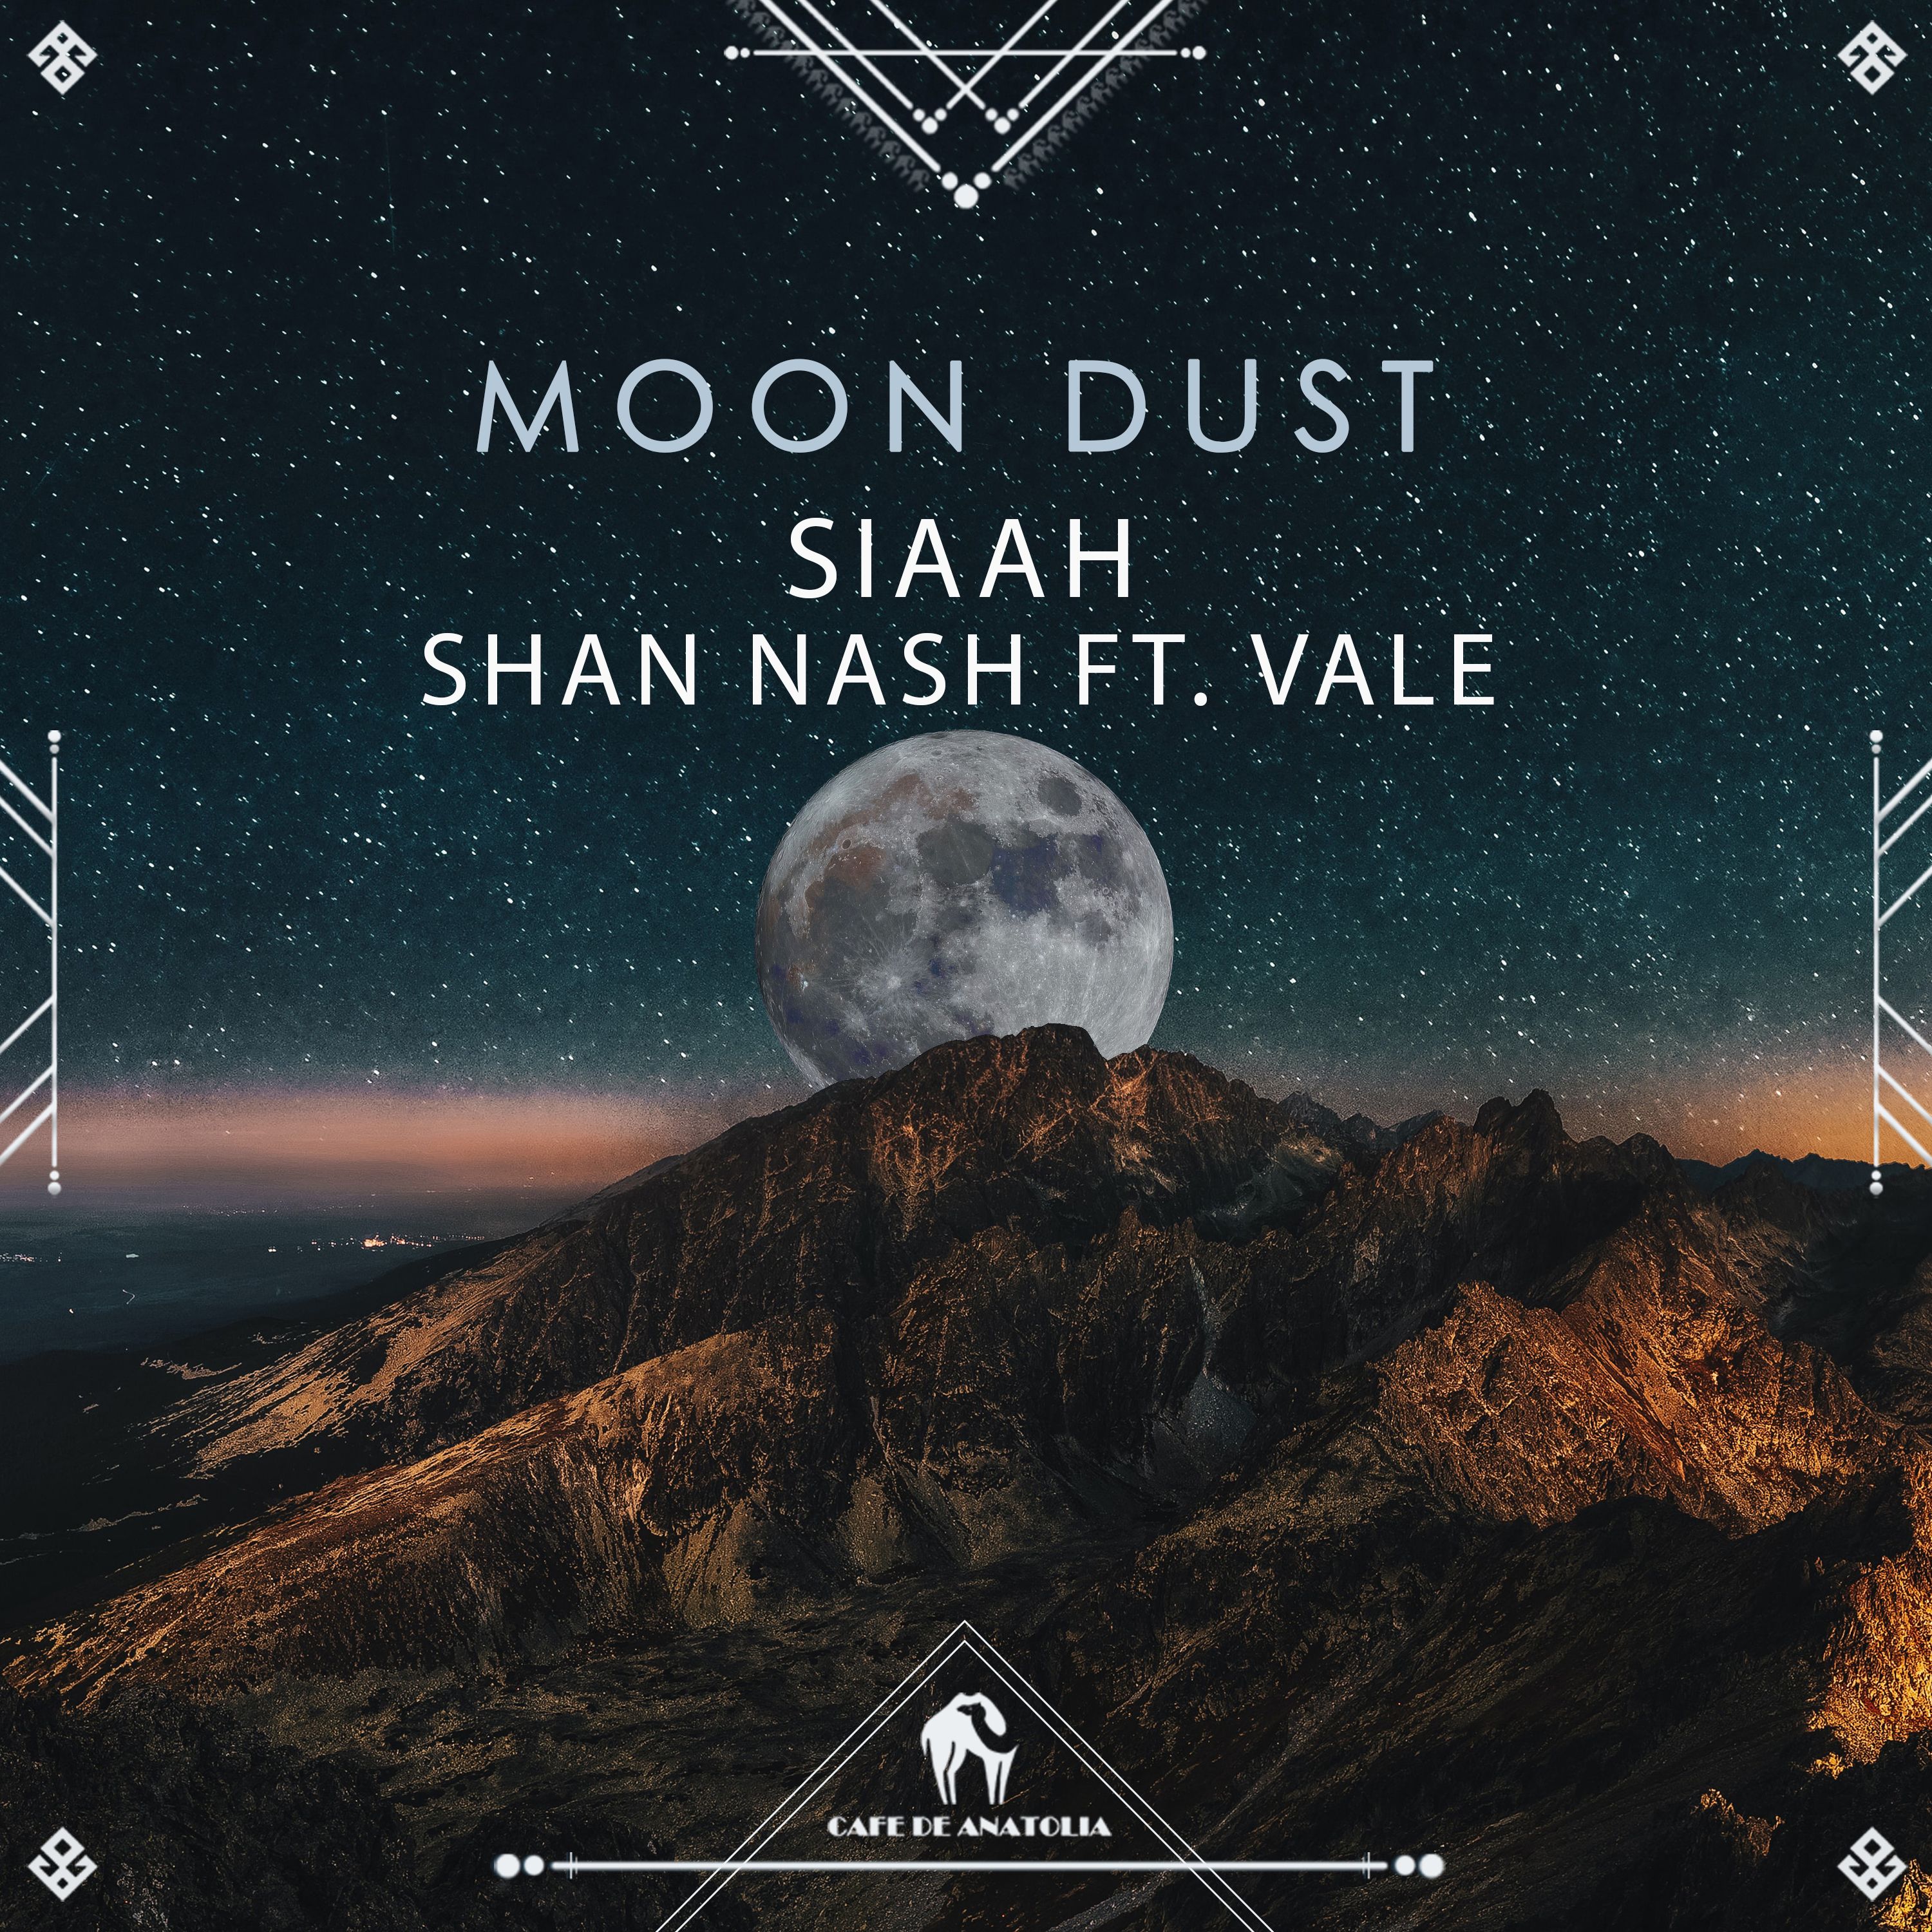 SIAAH - Moon Dust (Cafe De Anatolia)